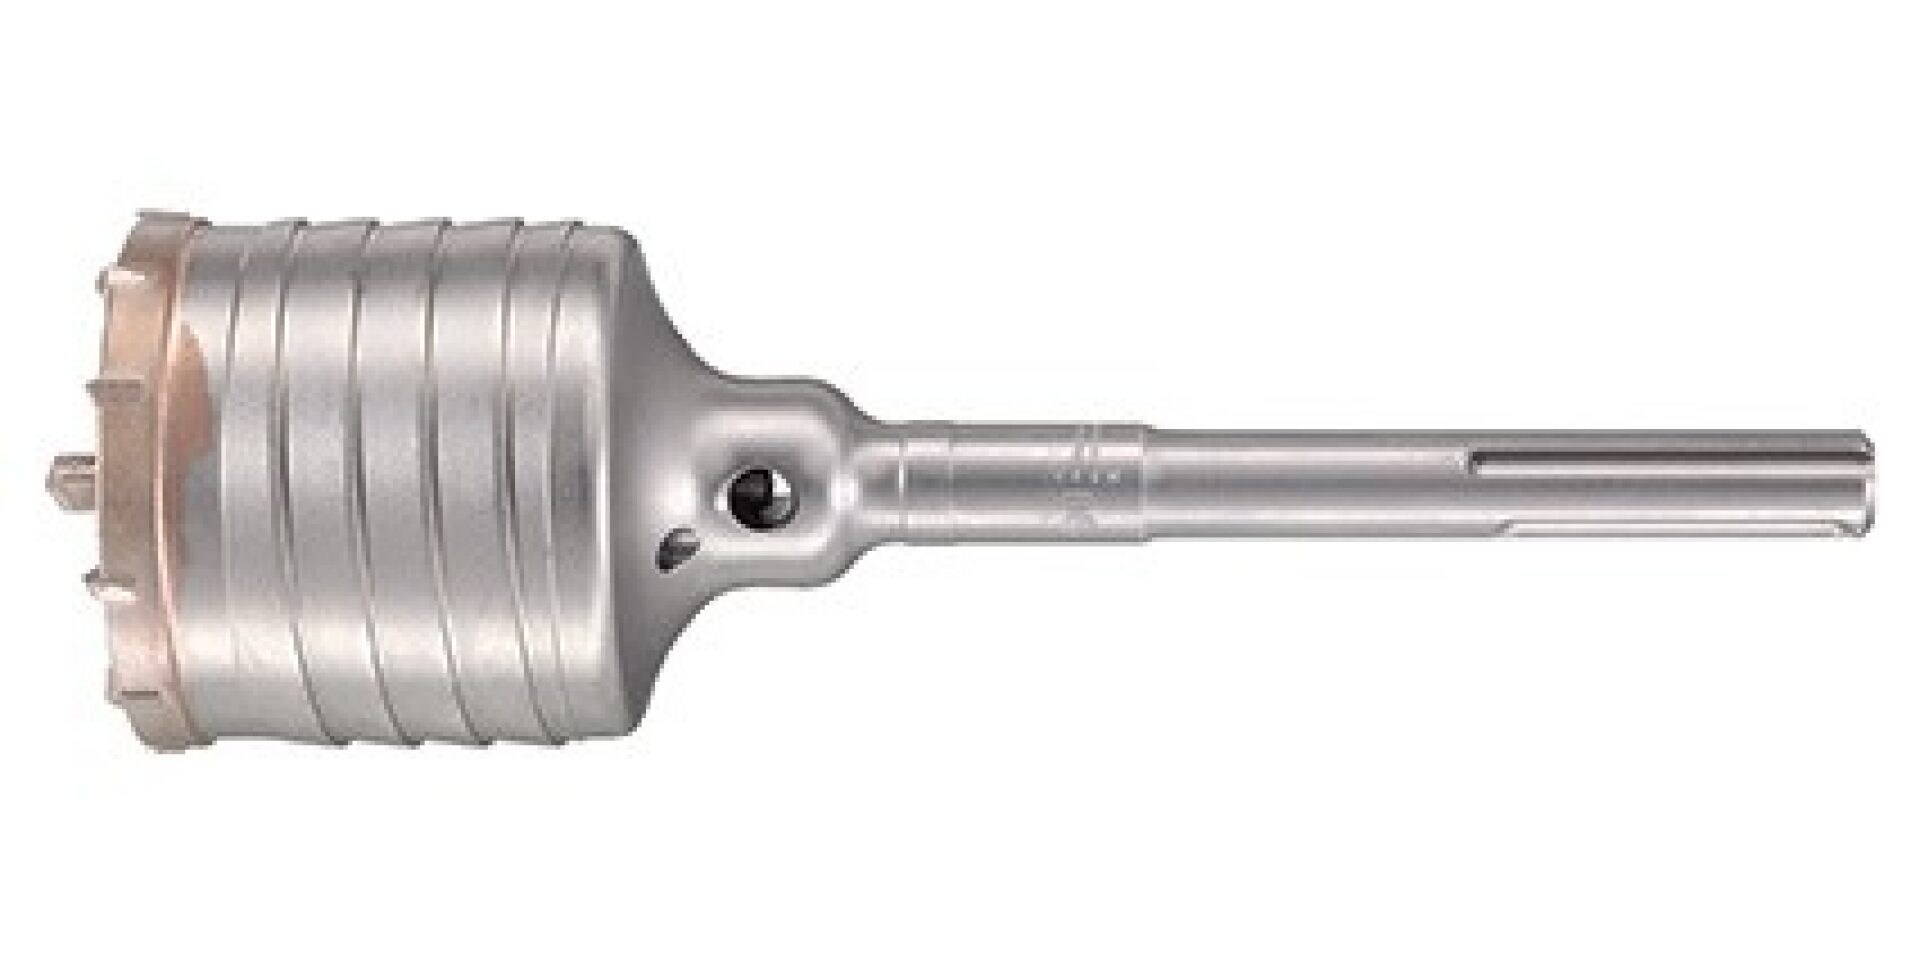 TE-Y-BK (SDS Max) percussion core hammer drill bit